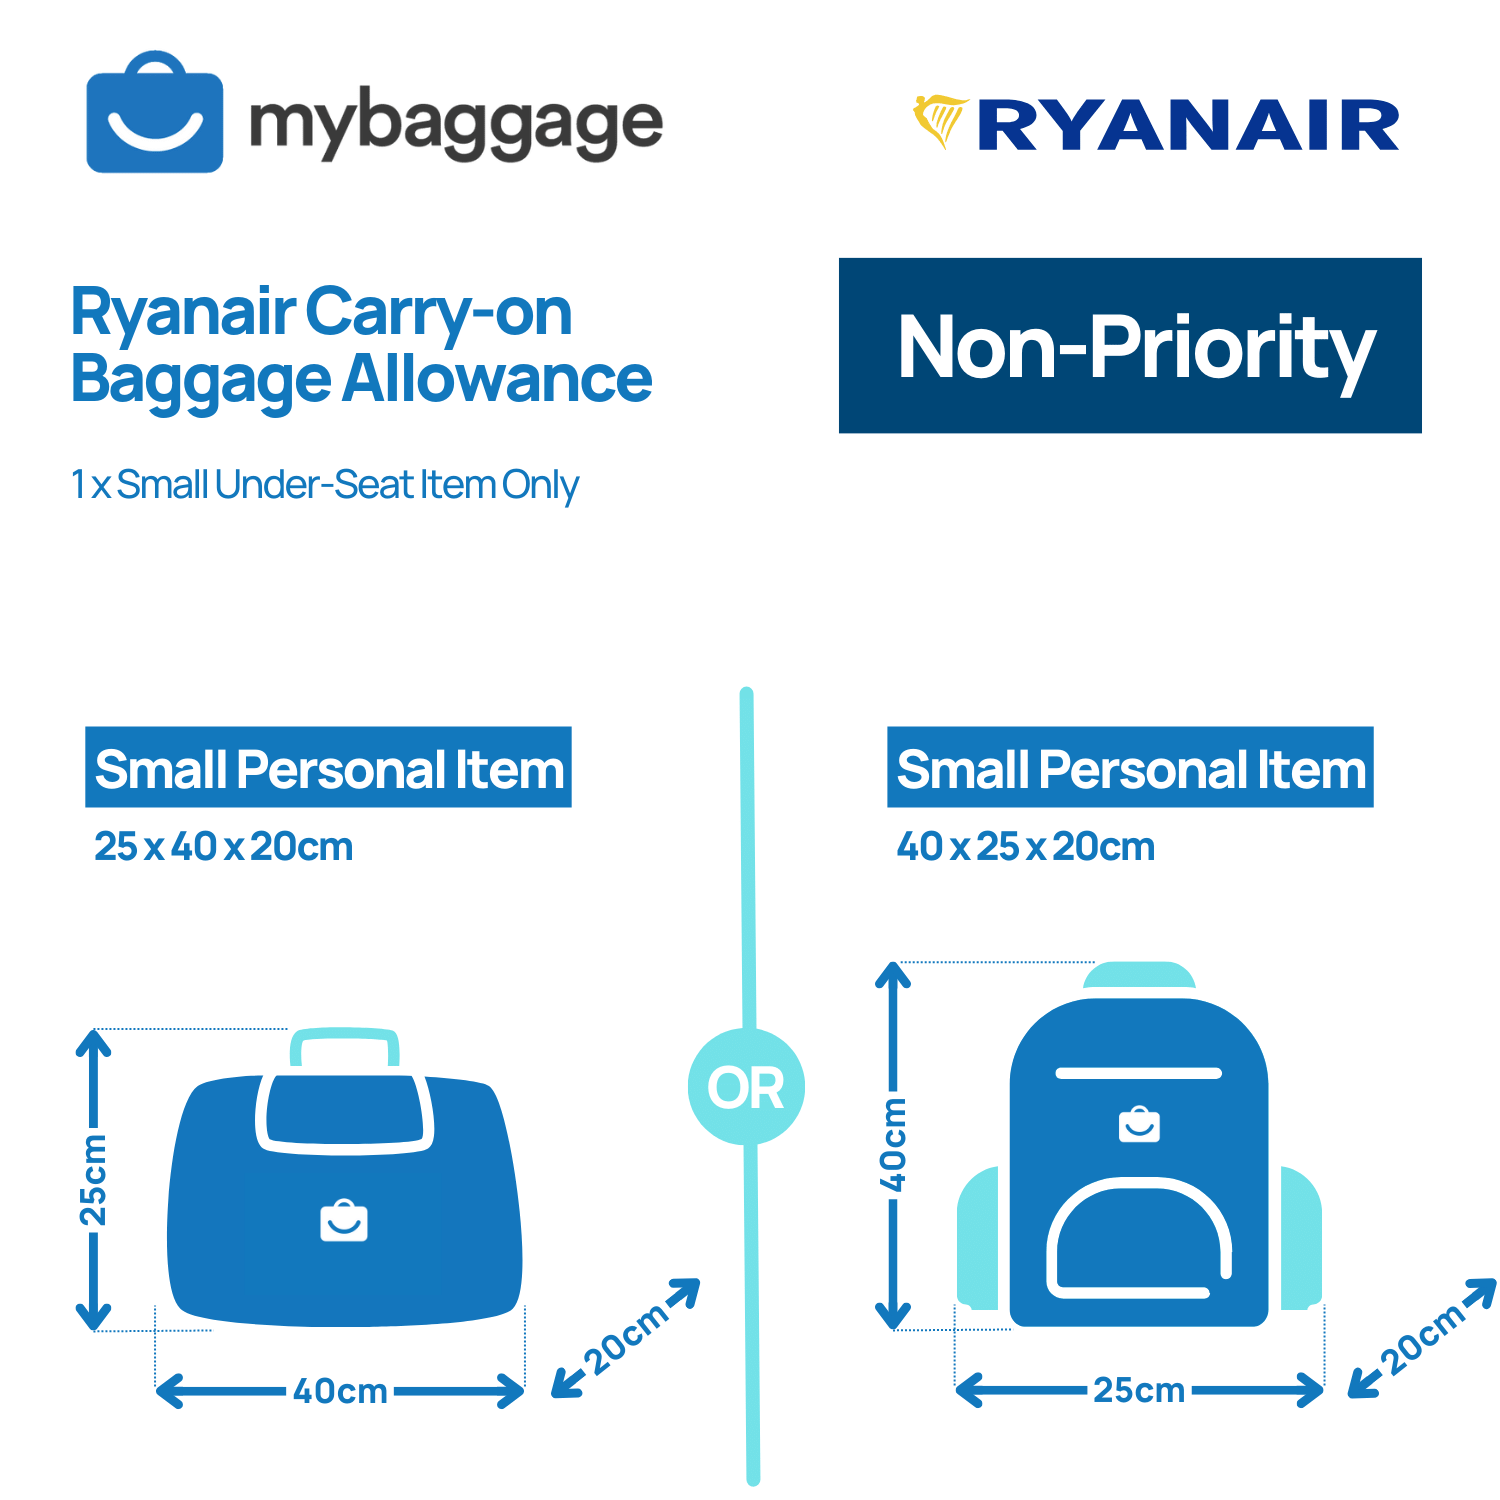 Ryanair Non-Priority